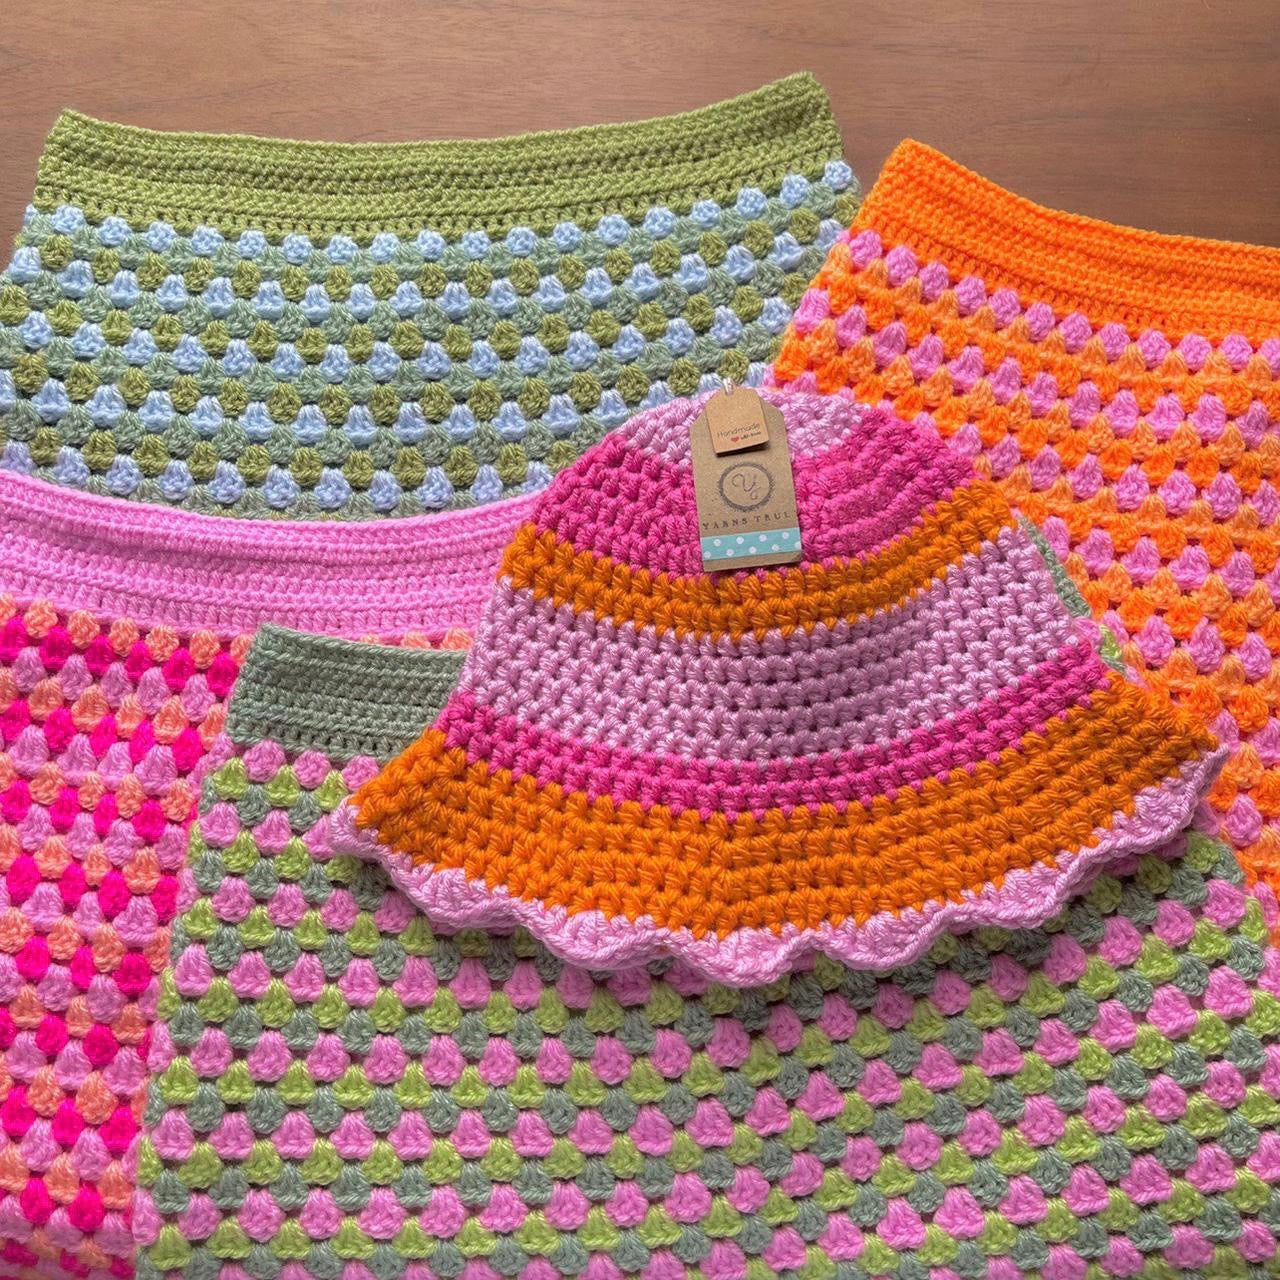 Handmade scallop edge crochet bucket hat in orange and pink